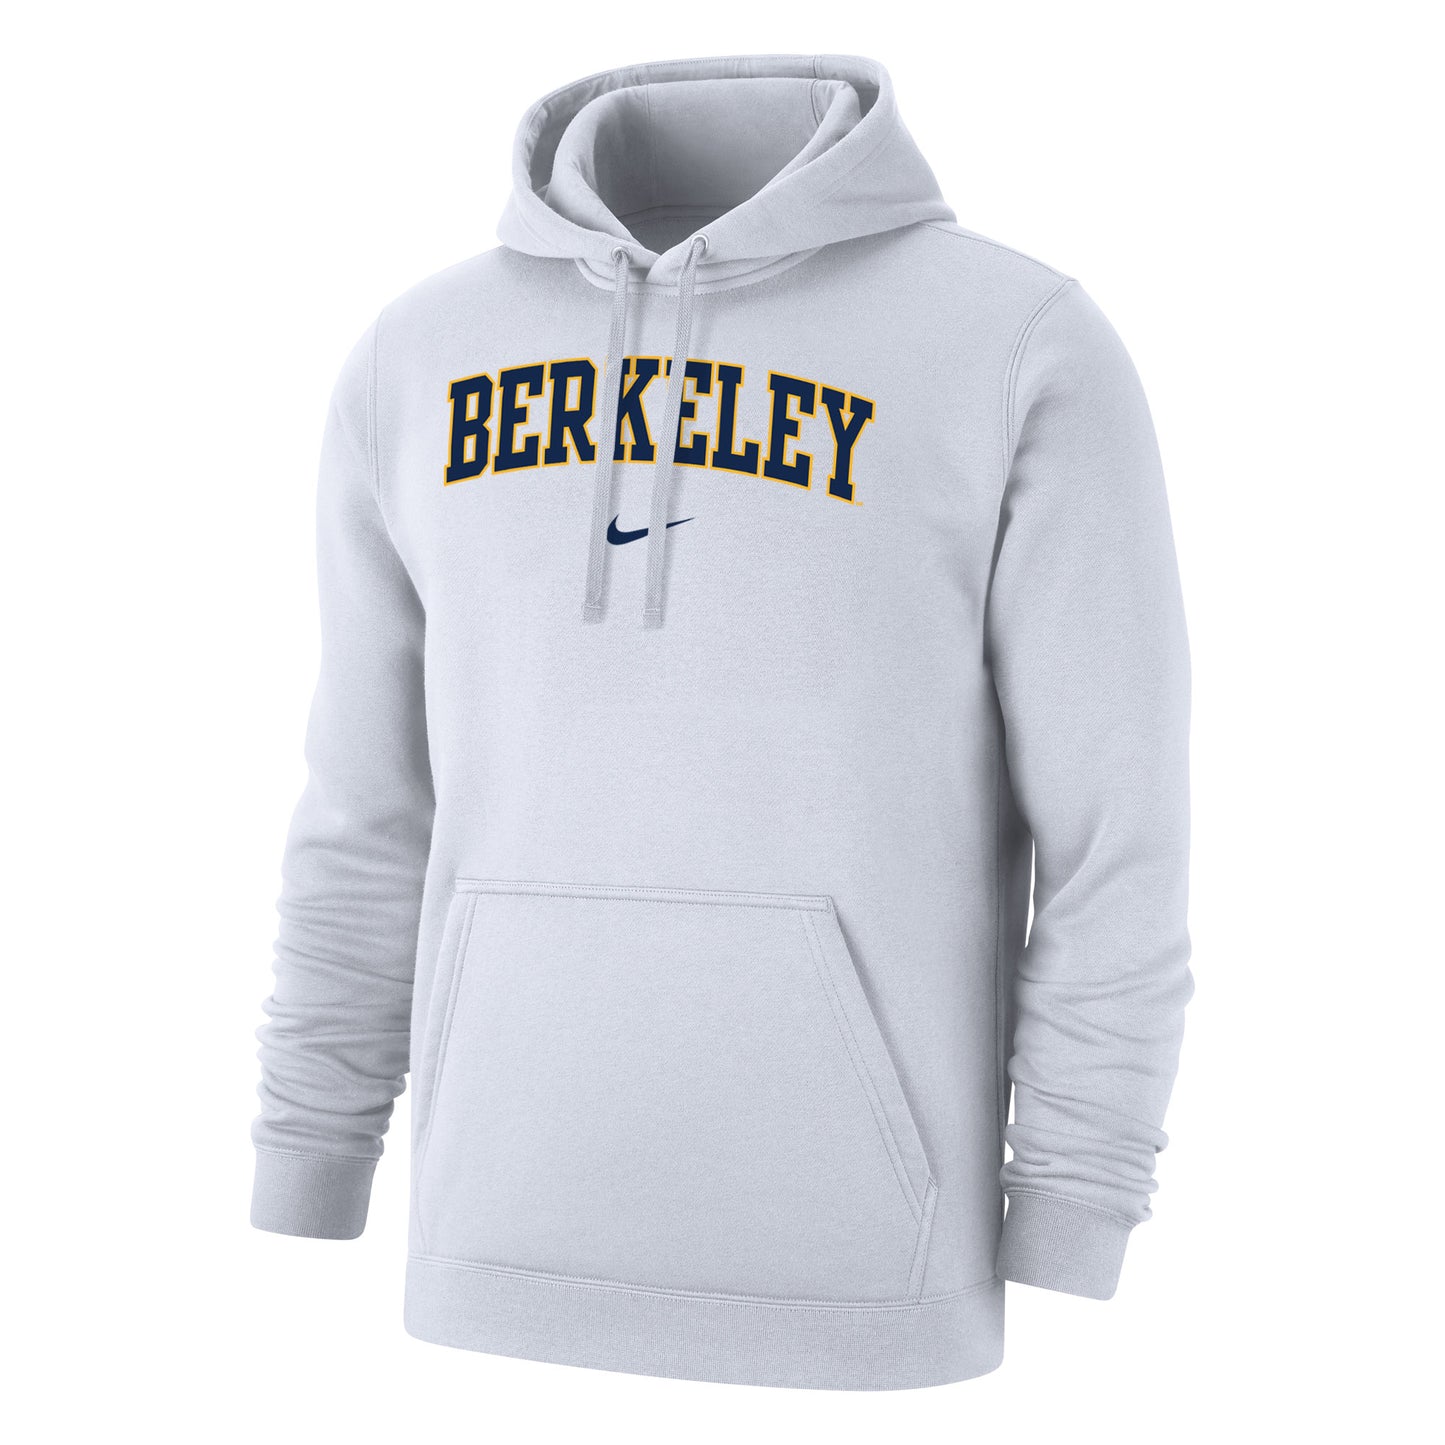 U.C. Berkeley Nike Cal club fleece hoodie with Berkeley wordmarkgraphic sweatshirt-White-Shop College Wear